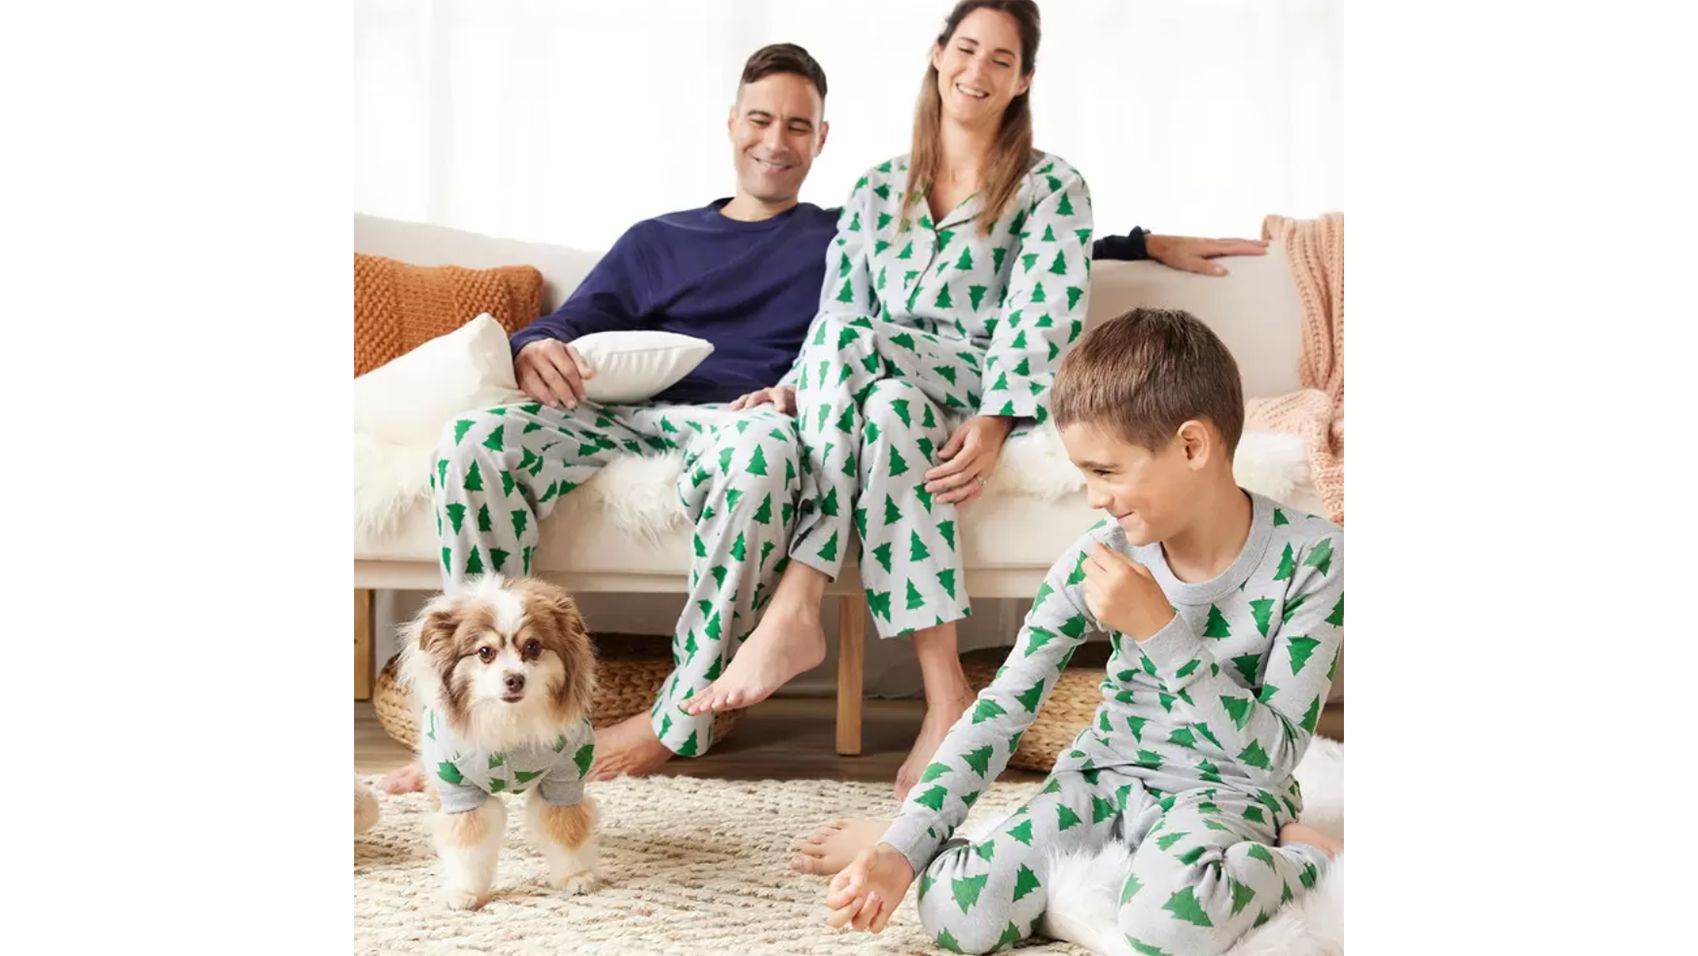 Big & Tall Jammies For Your Families® Santa Coming Soon Pajama Set